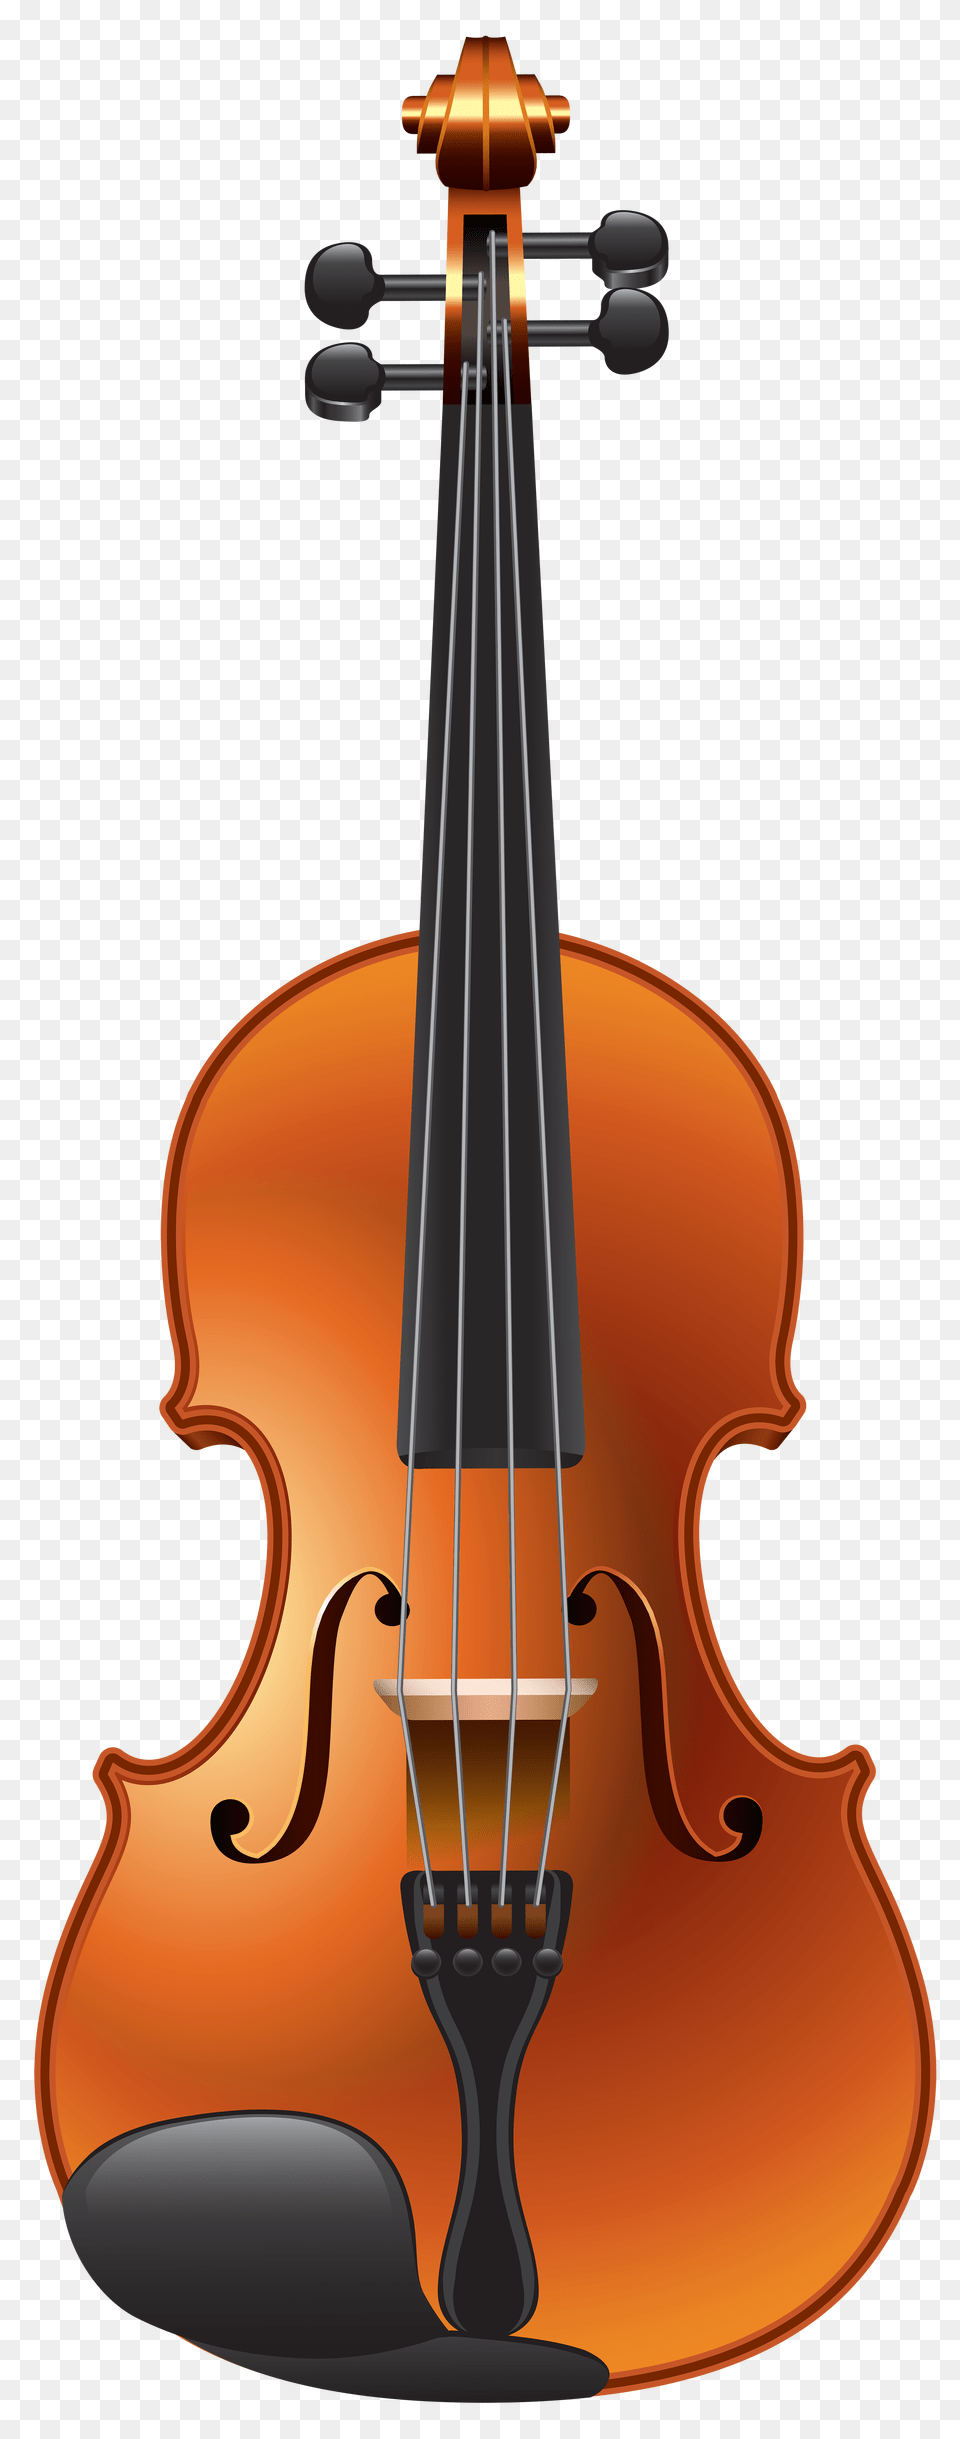 Violin Transparent Clip Art Image, Musical Instrument Png